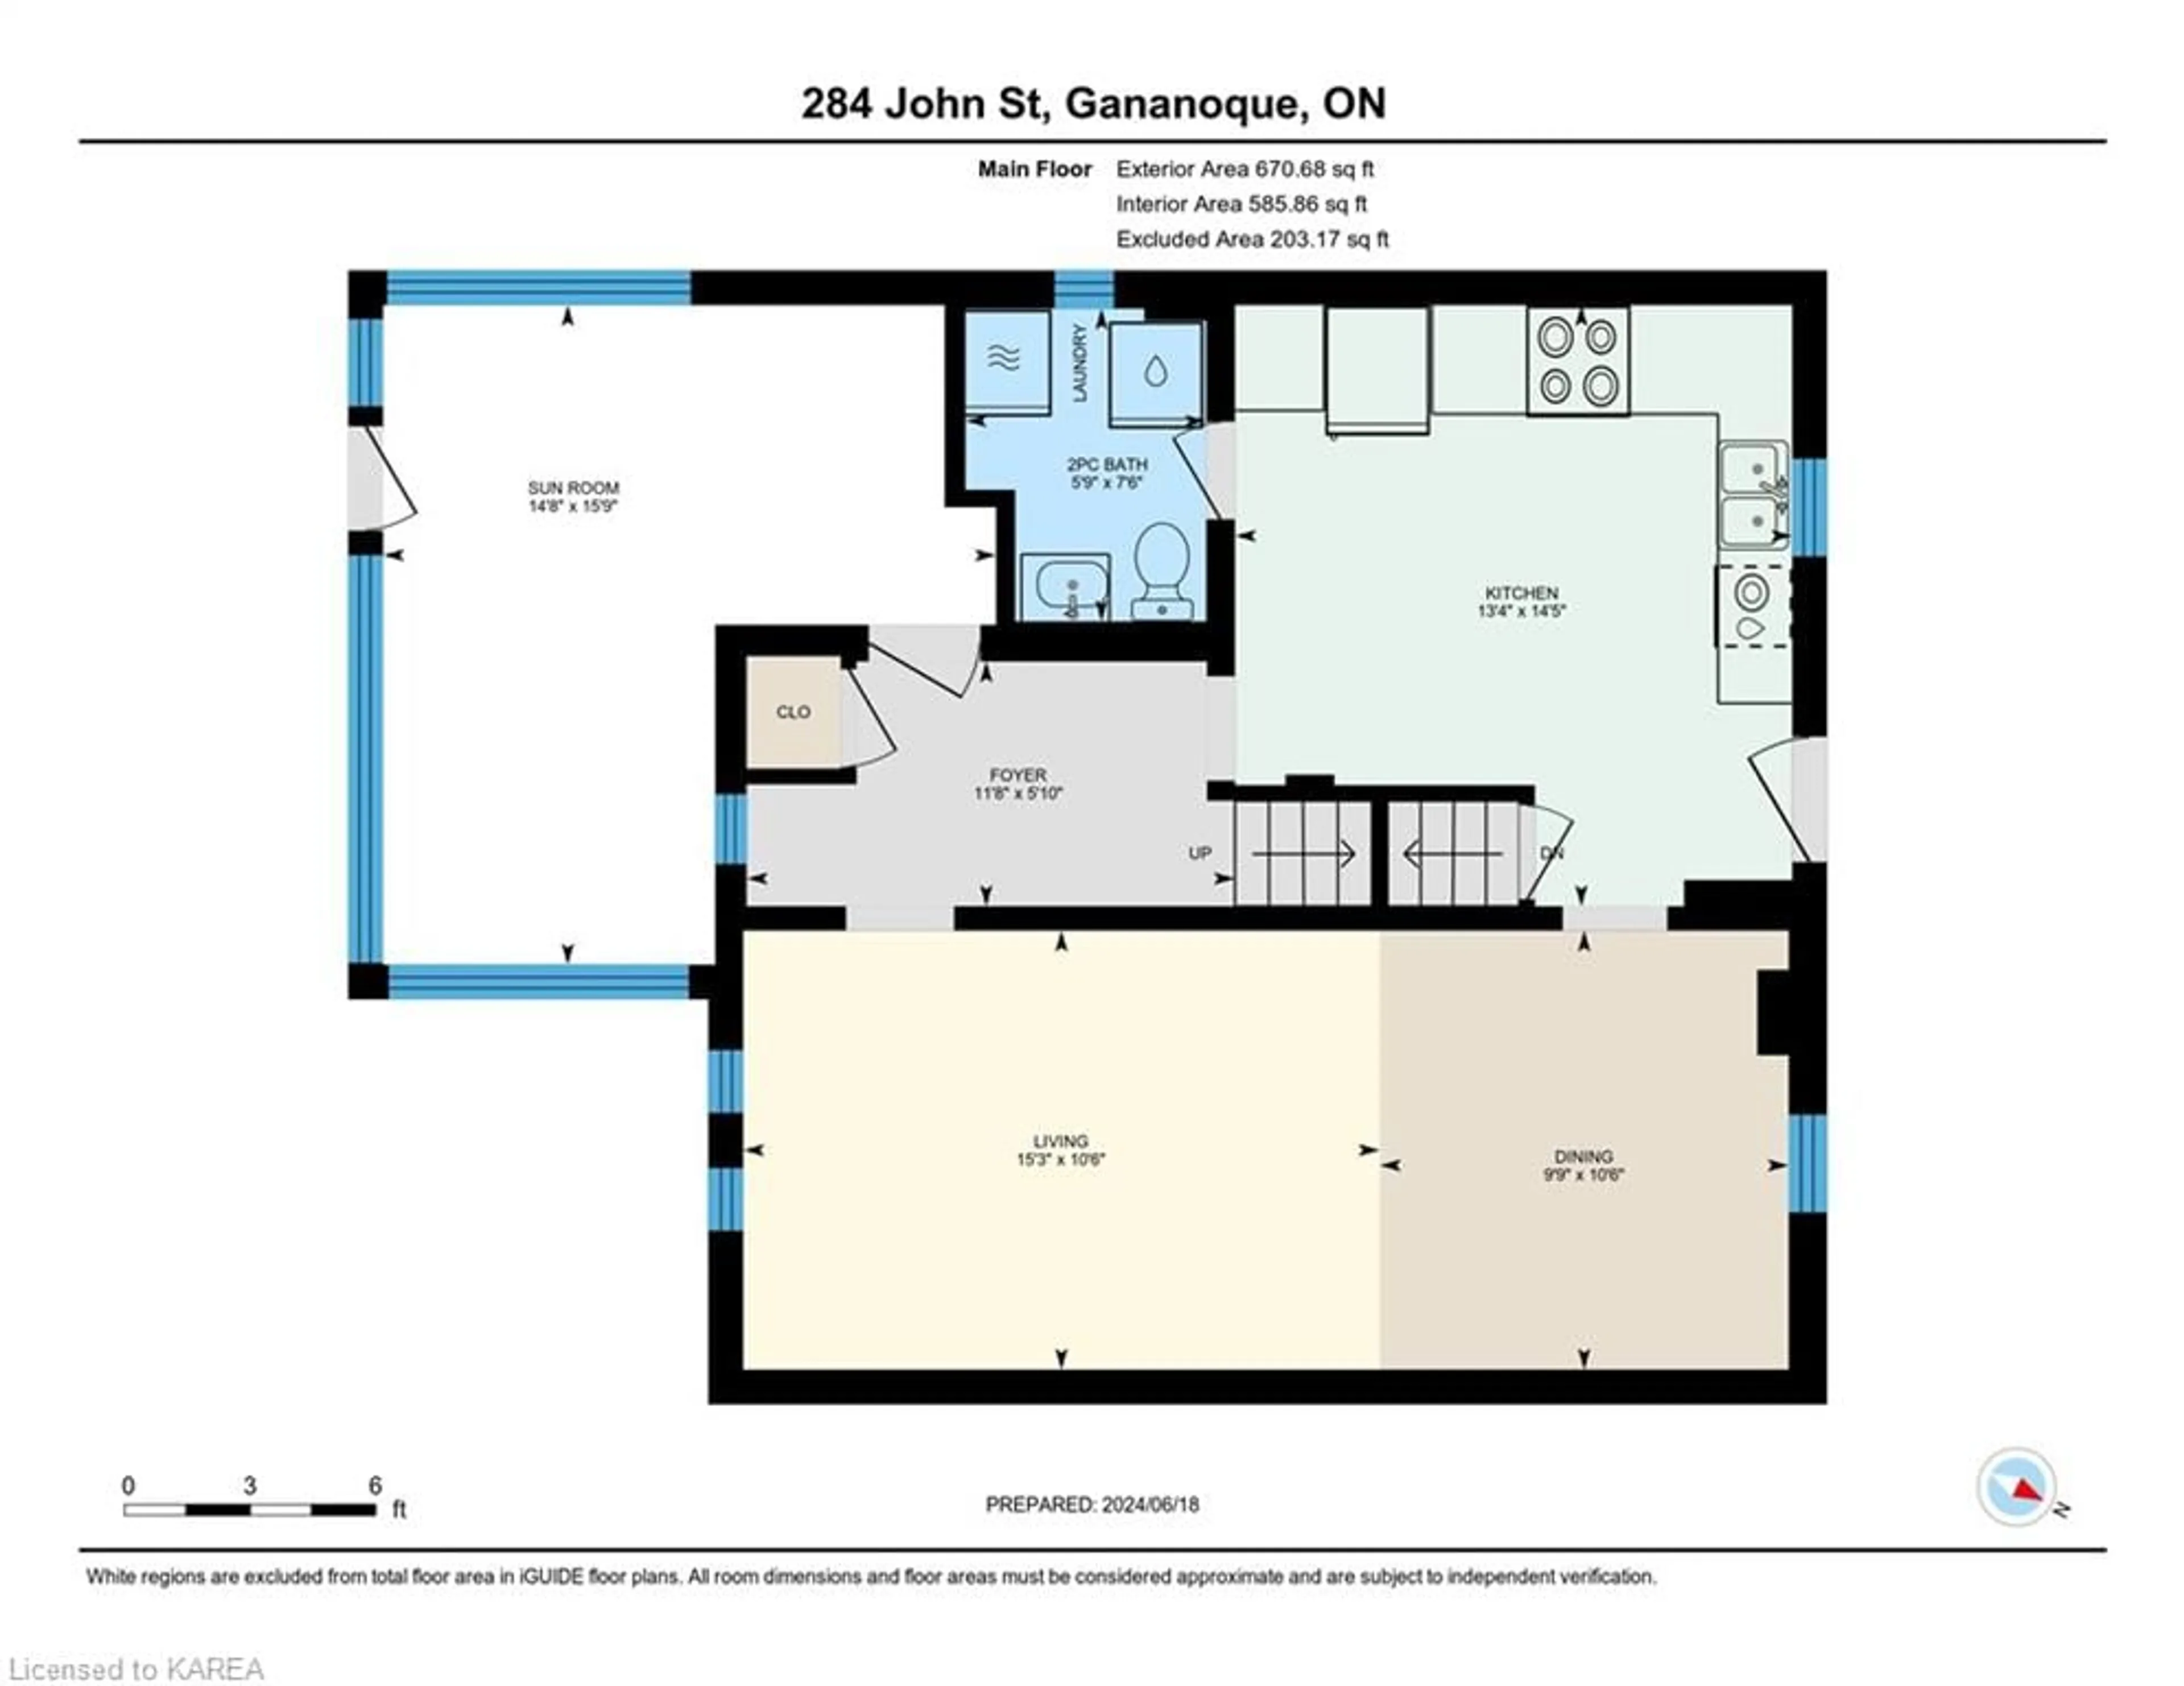 Floor plan for 284 John St, Gananoque Ontario K7G 1A7